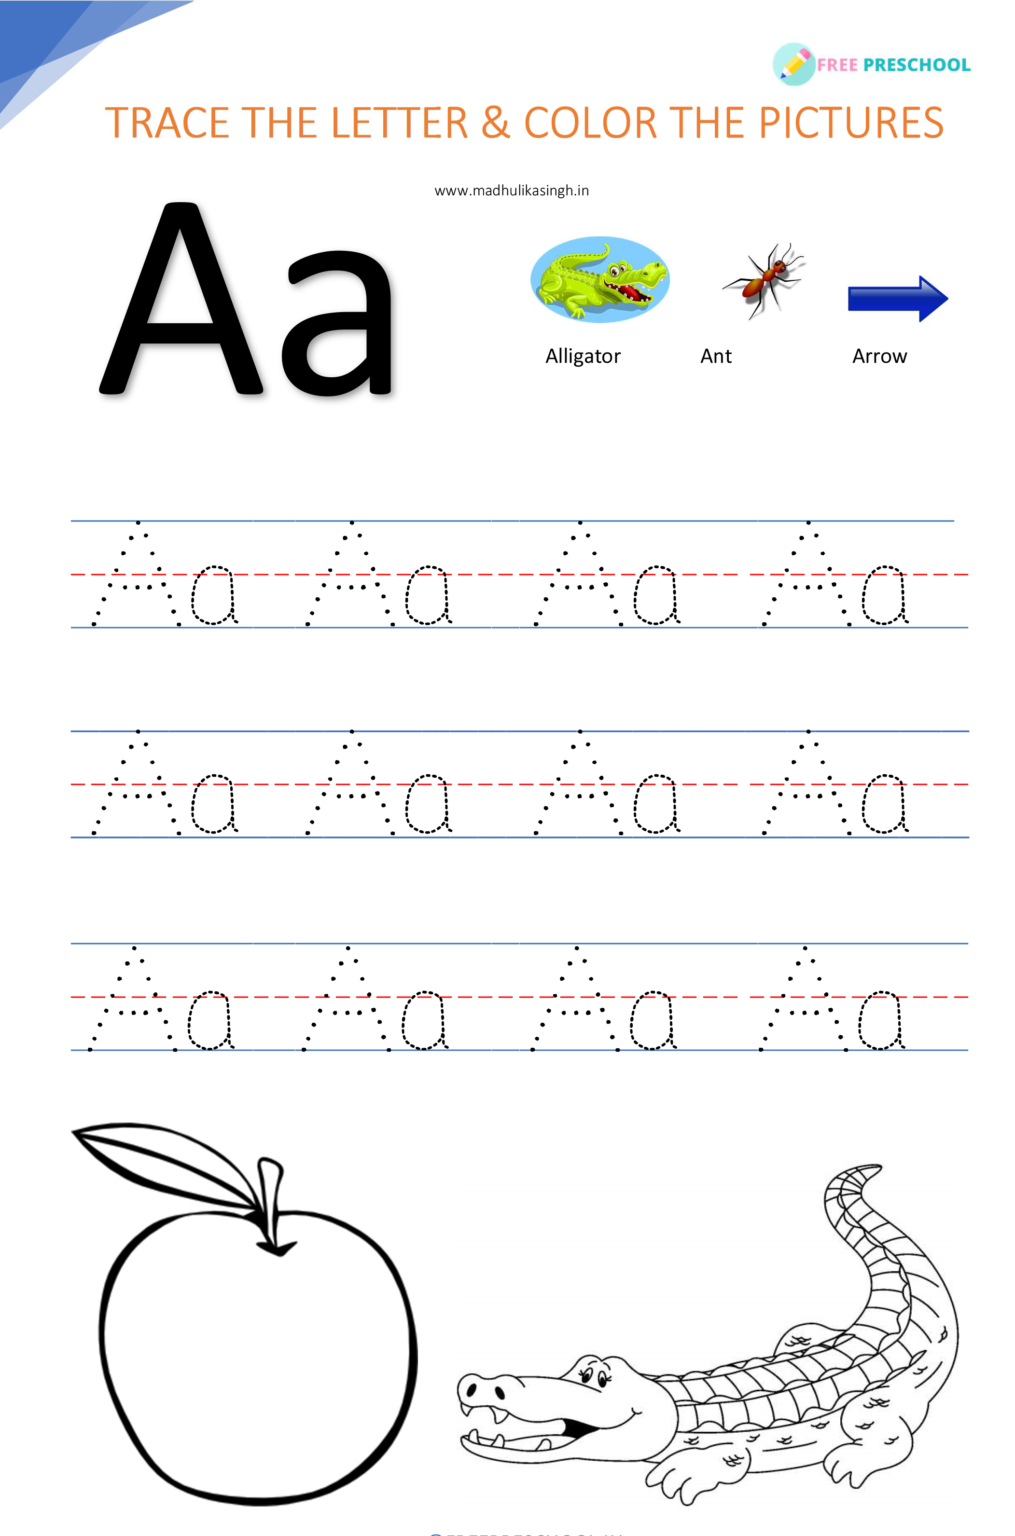 Alphabet for tracing Free Preschool